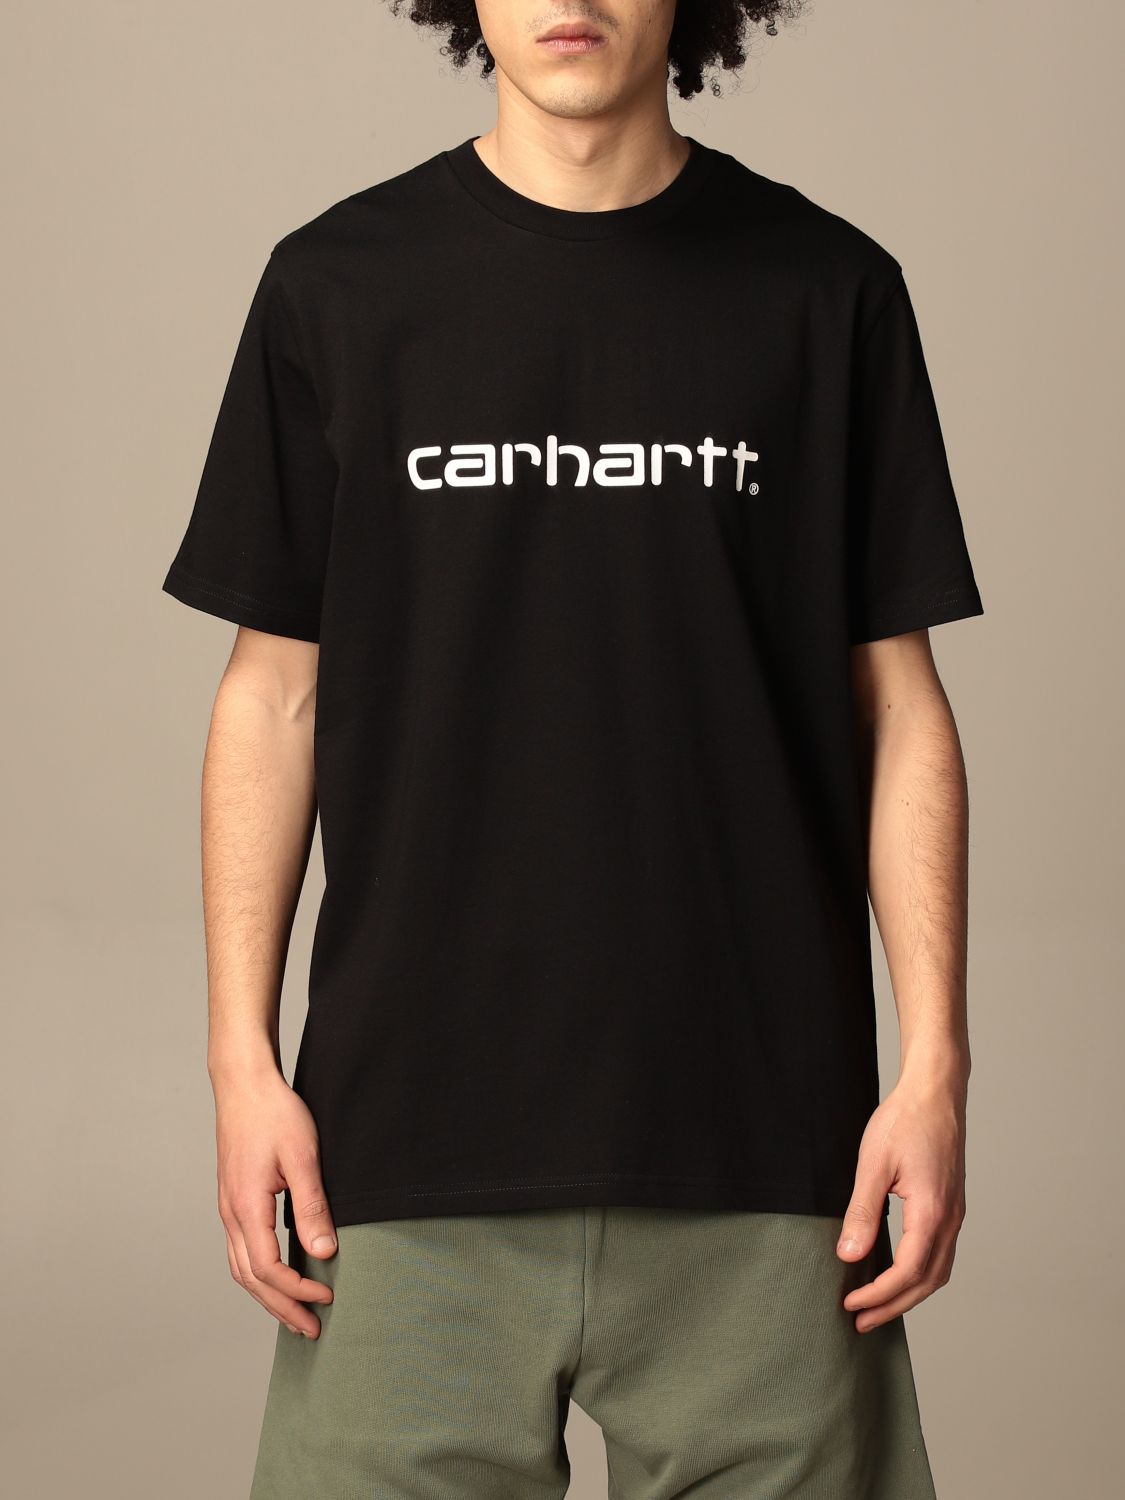 carhartt t shirt black